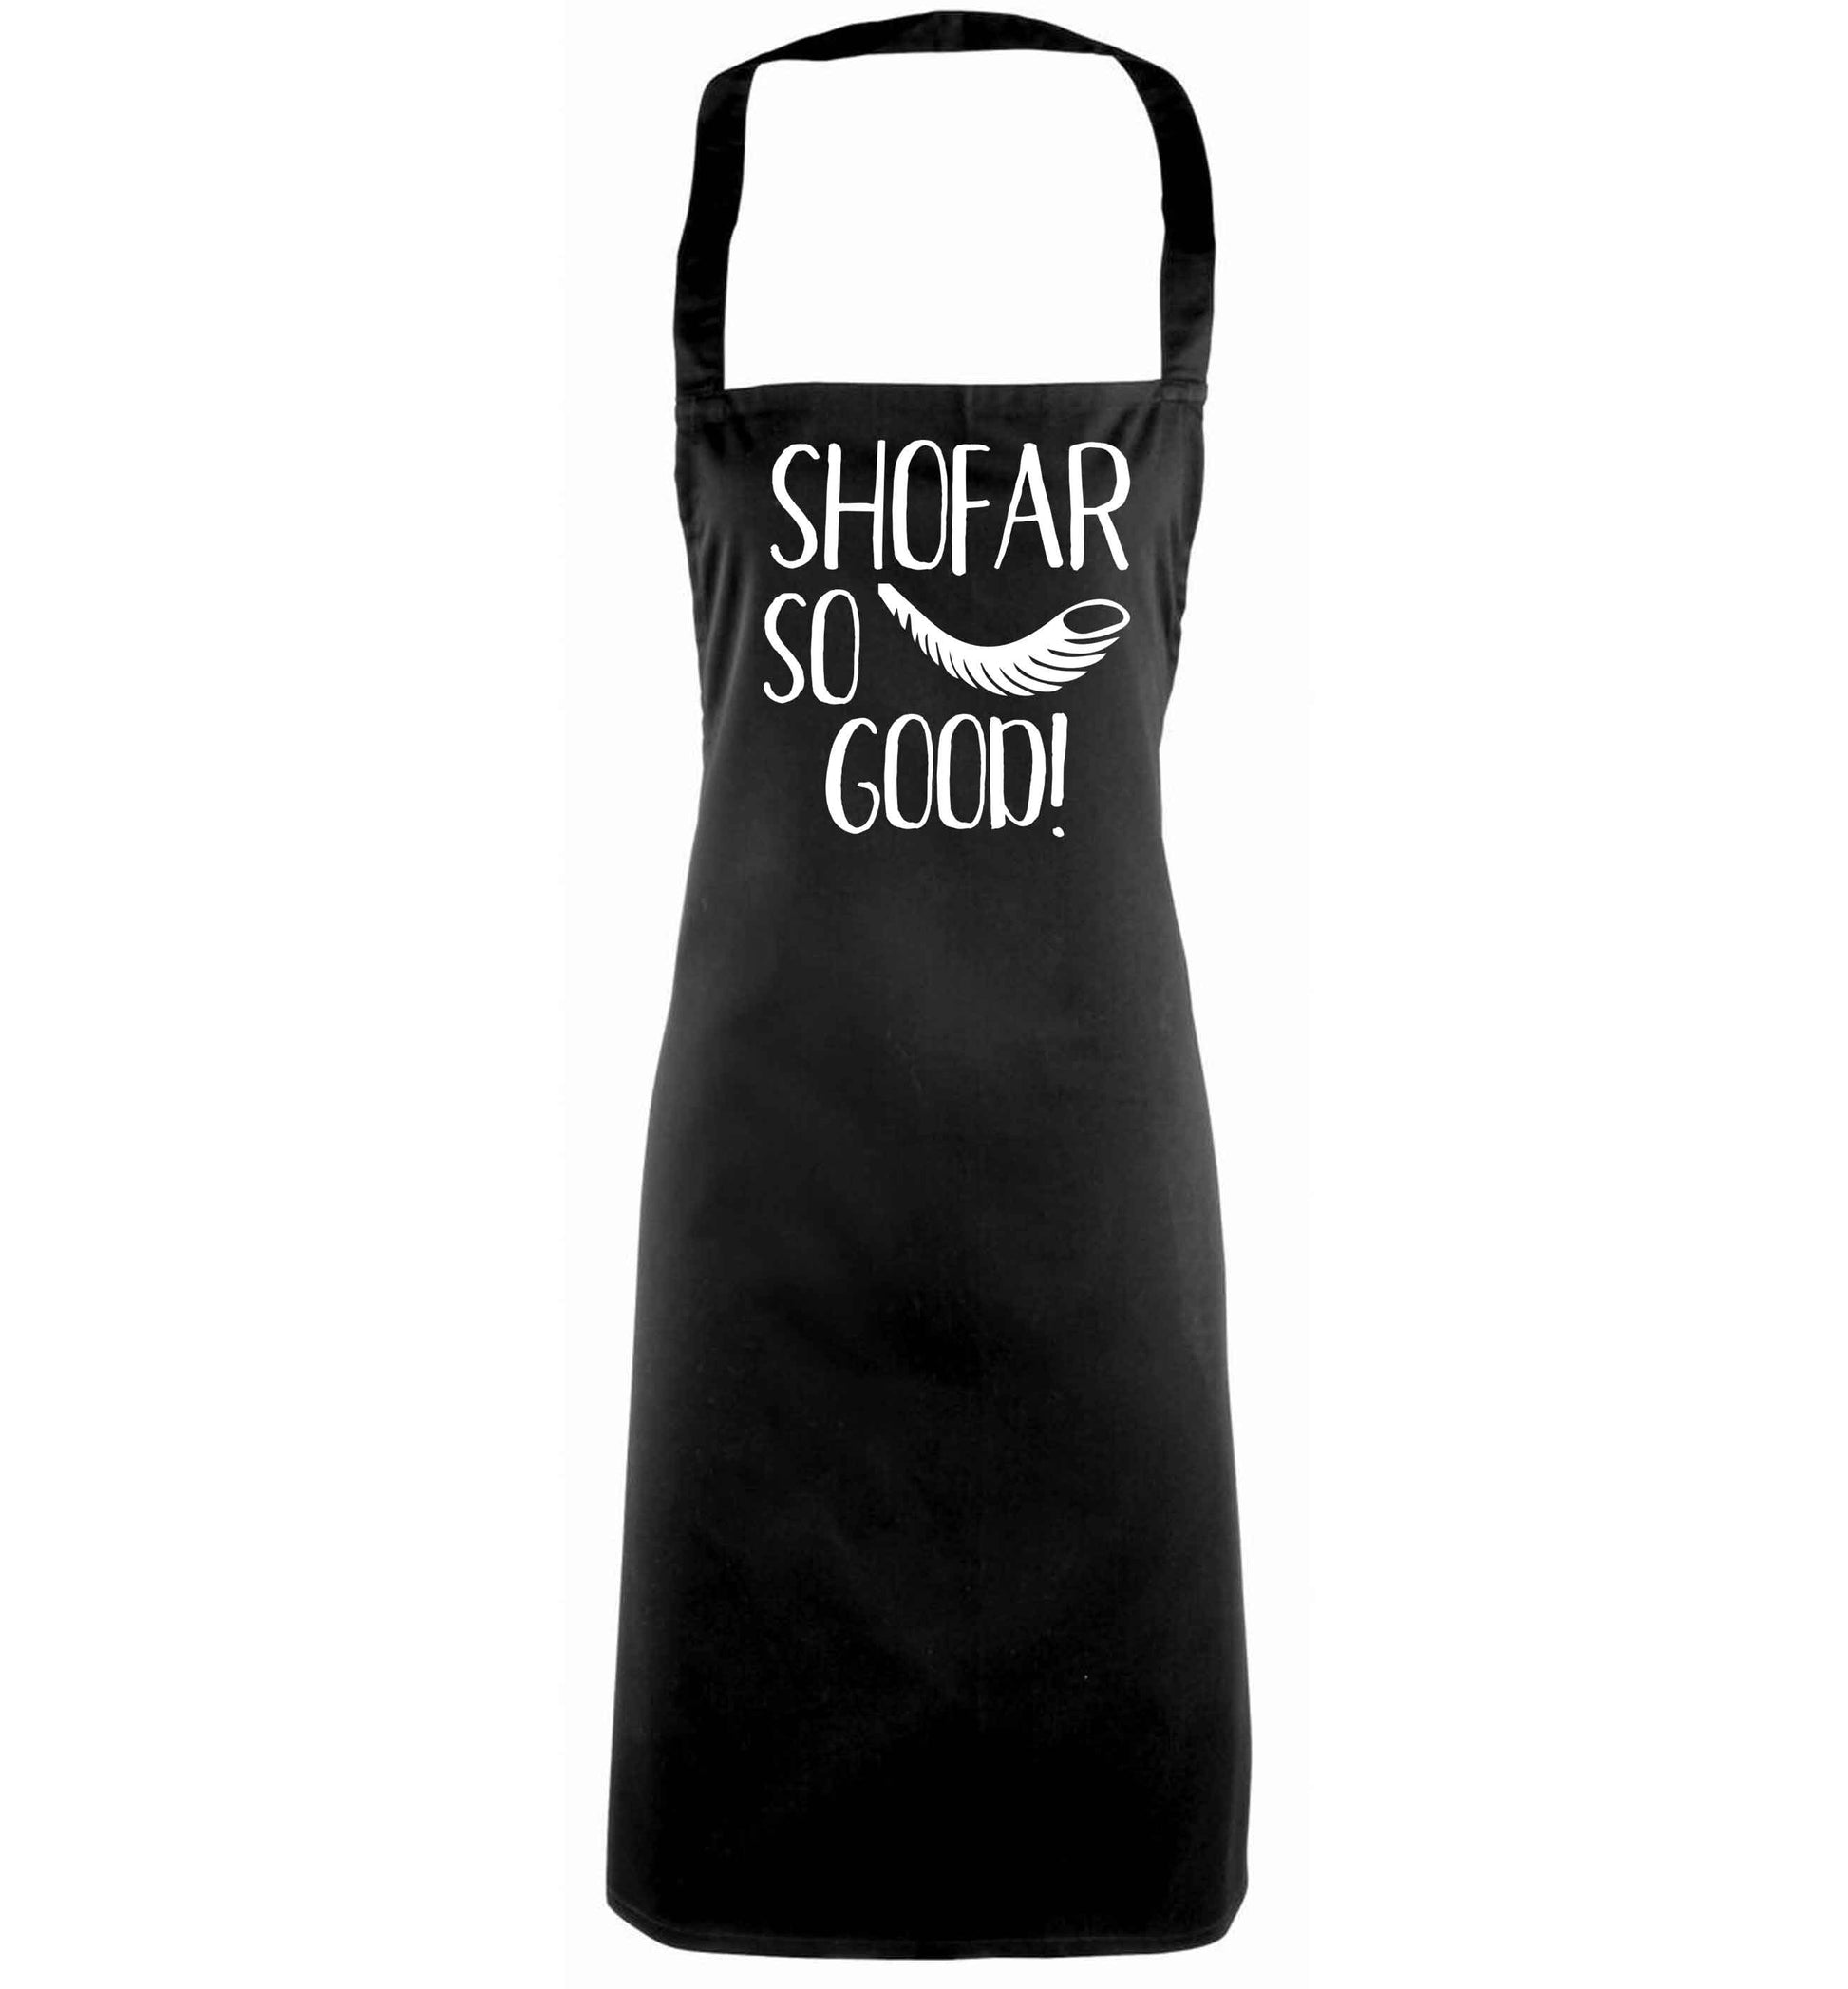 Shofar so good! black apron